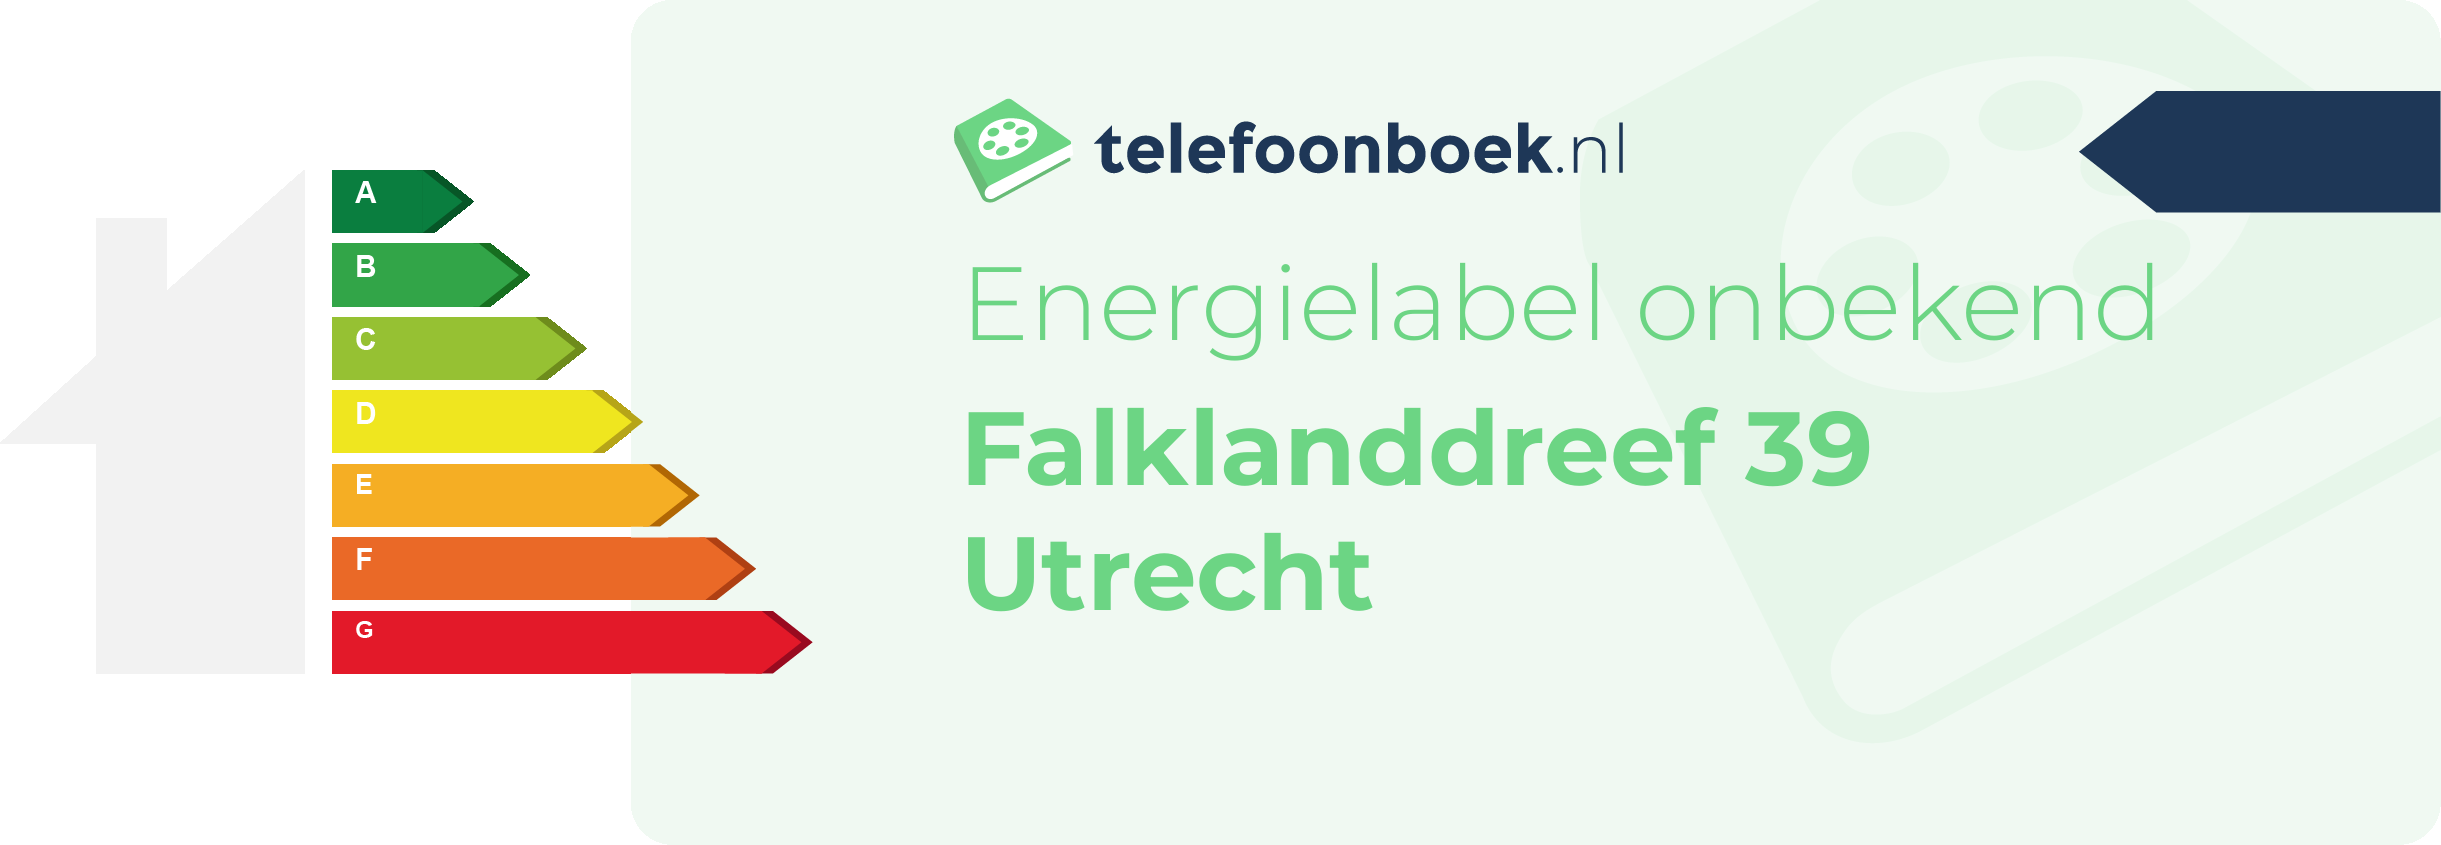 Energielabel Falklanddreef 39 Utrecht